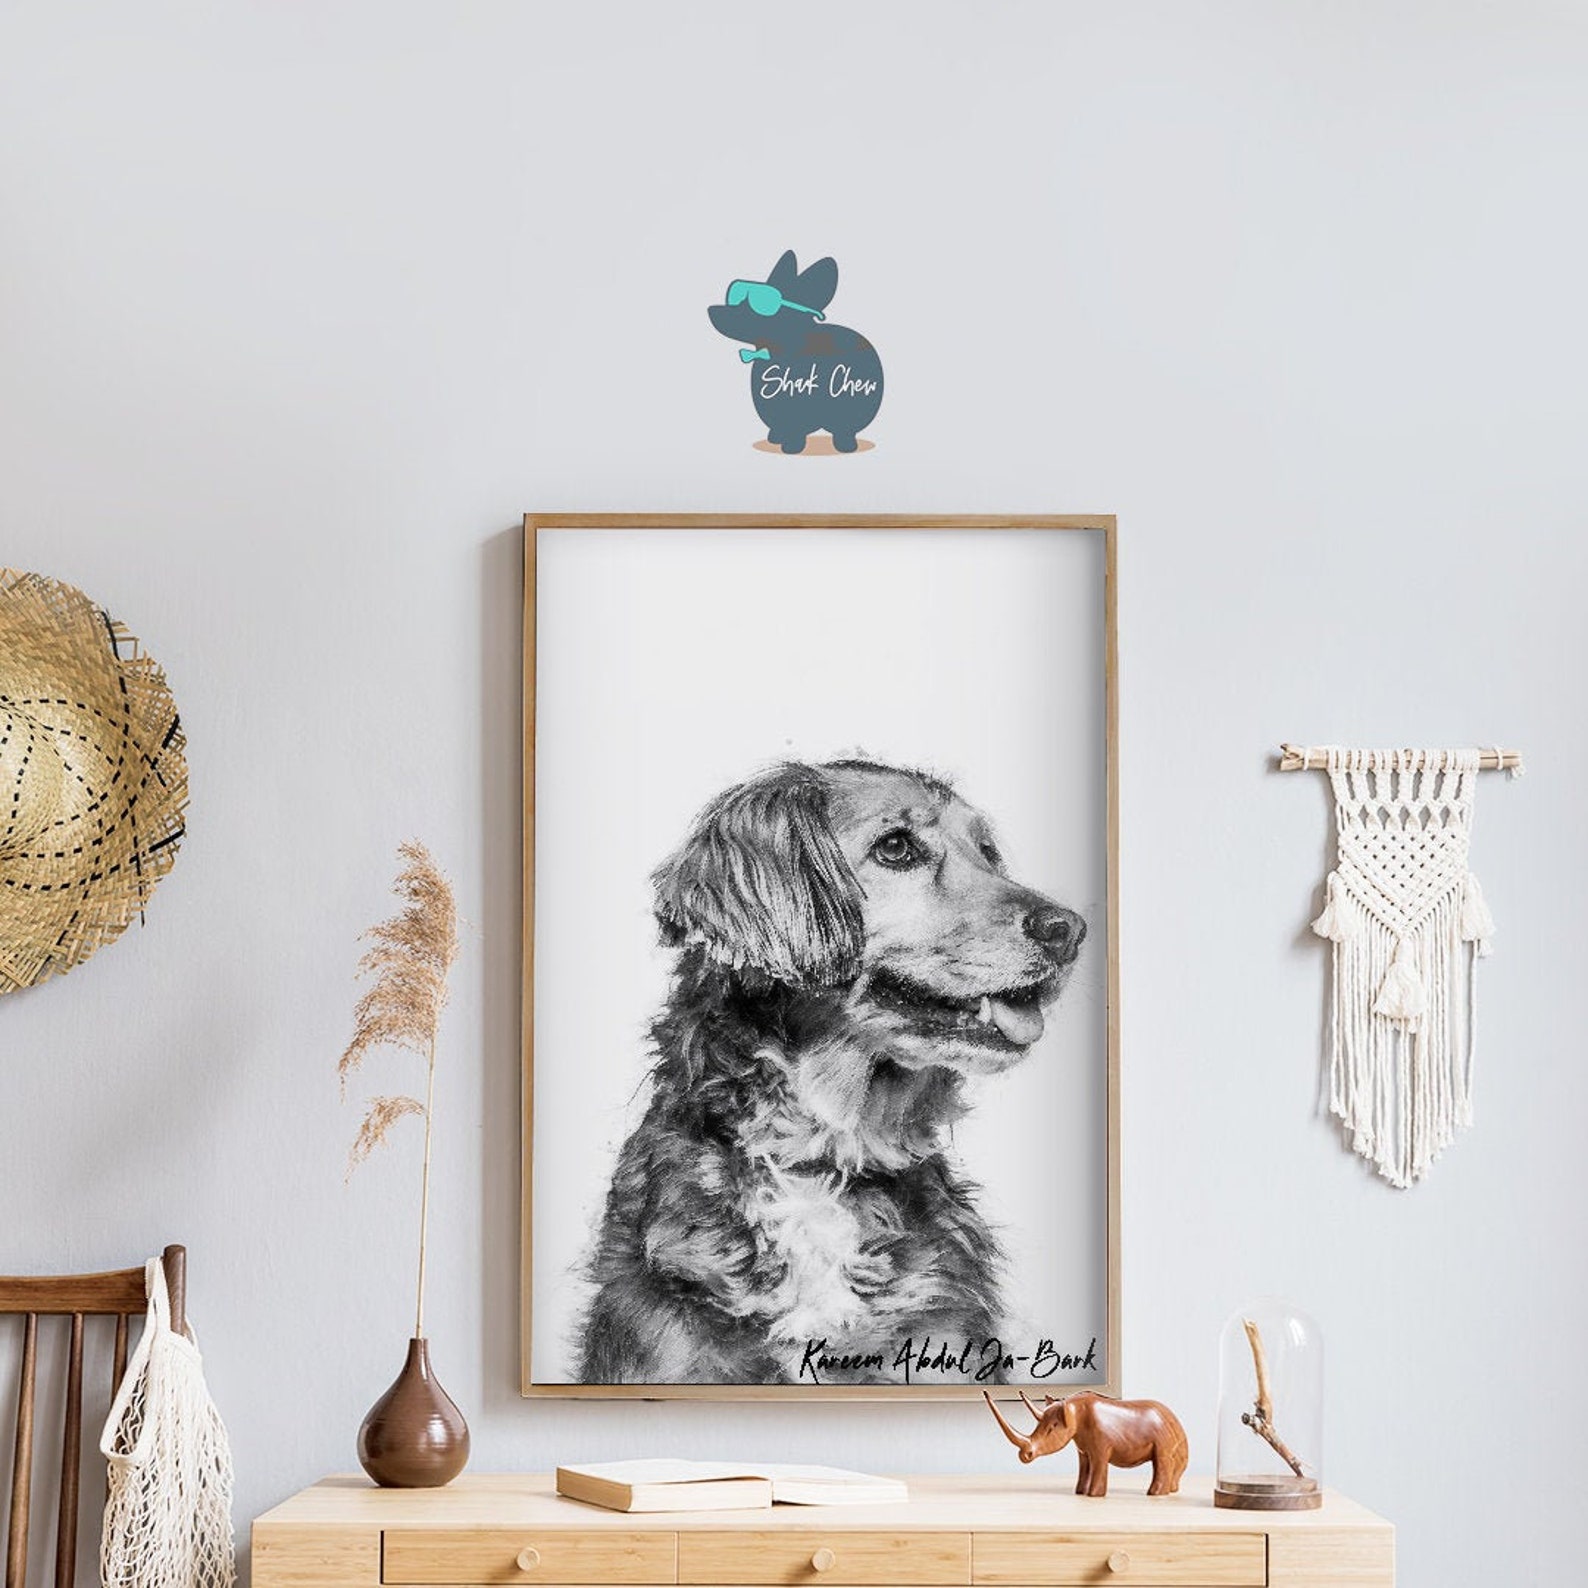 Digital Dog Portrait with floral deco